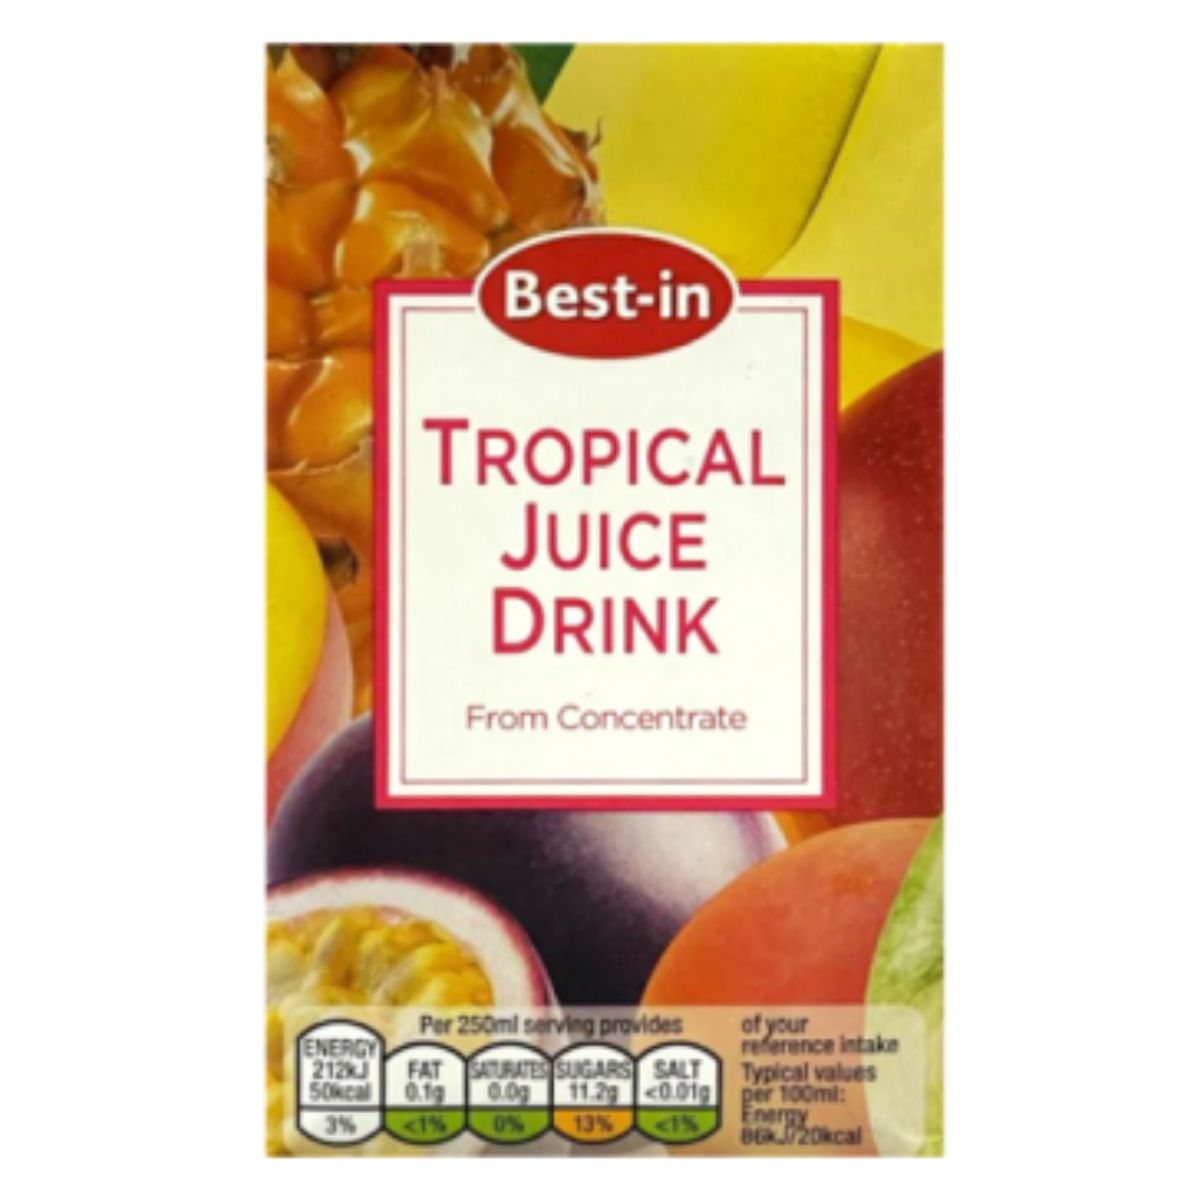 Best In tropical juice drink - 250ml.